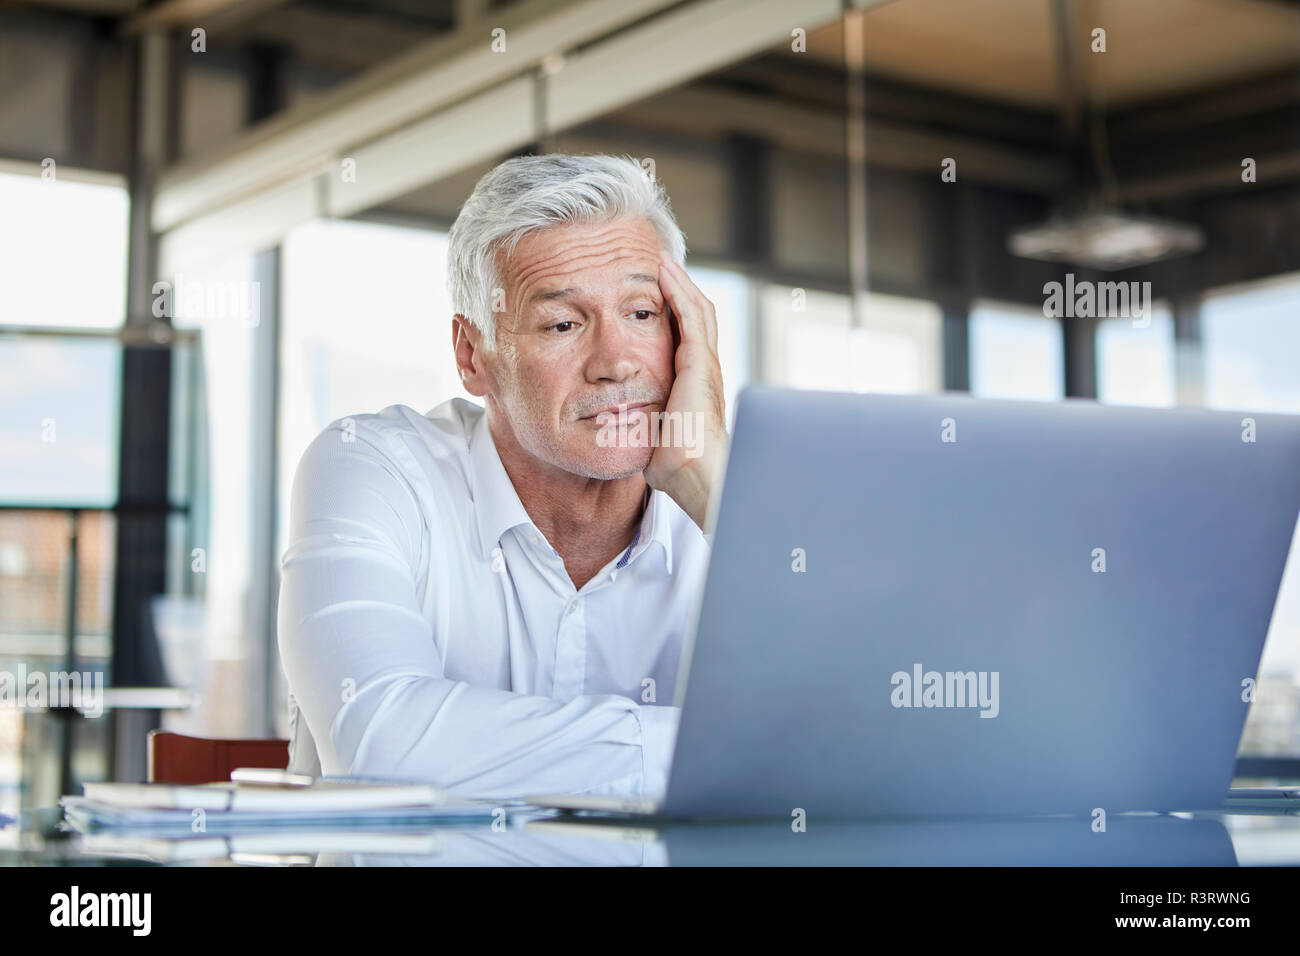 Bored businessman sitting at desk, using laptop Stock Photo